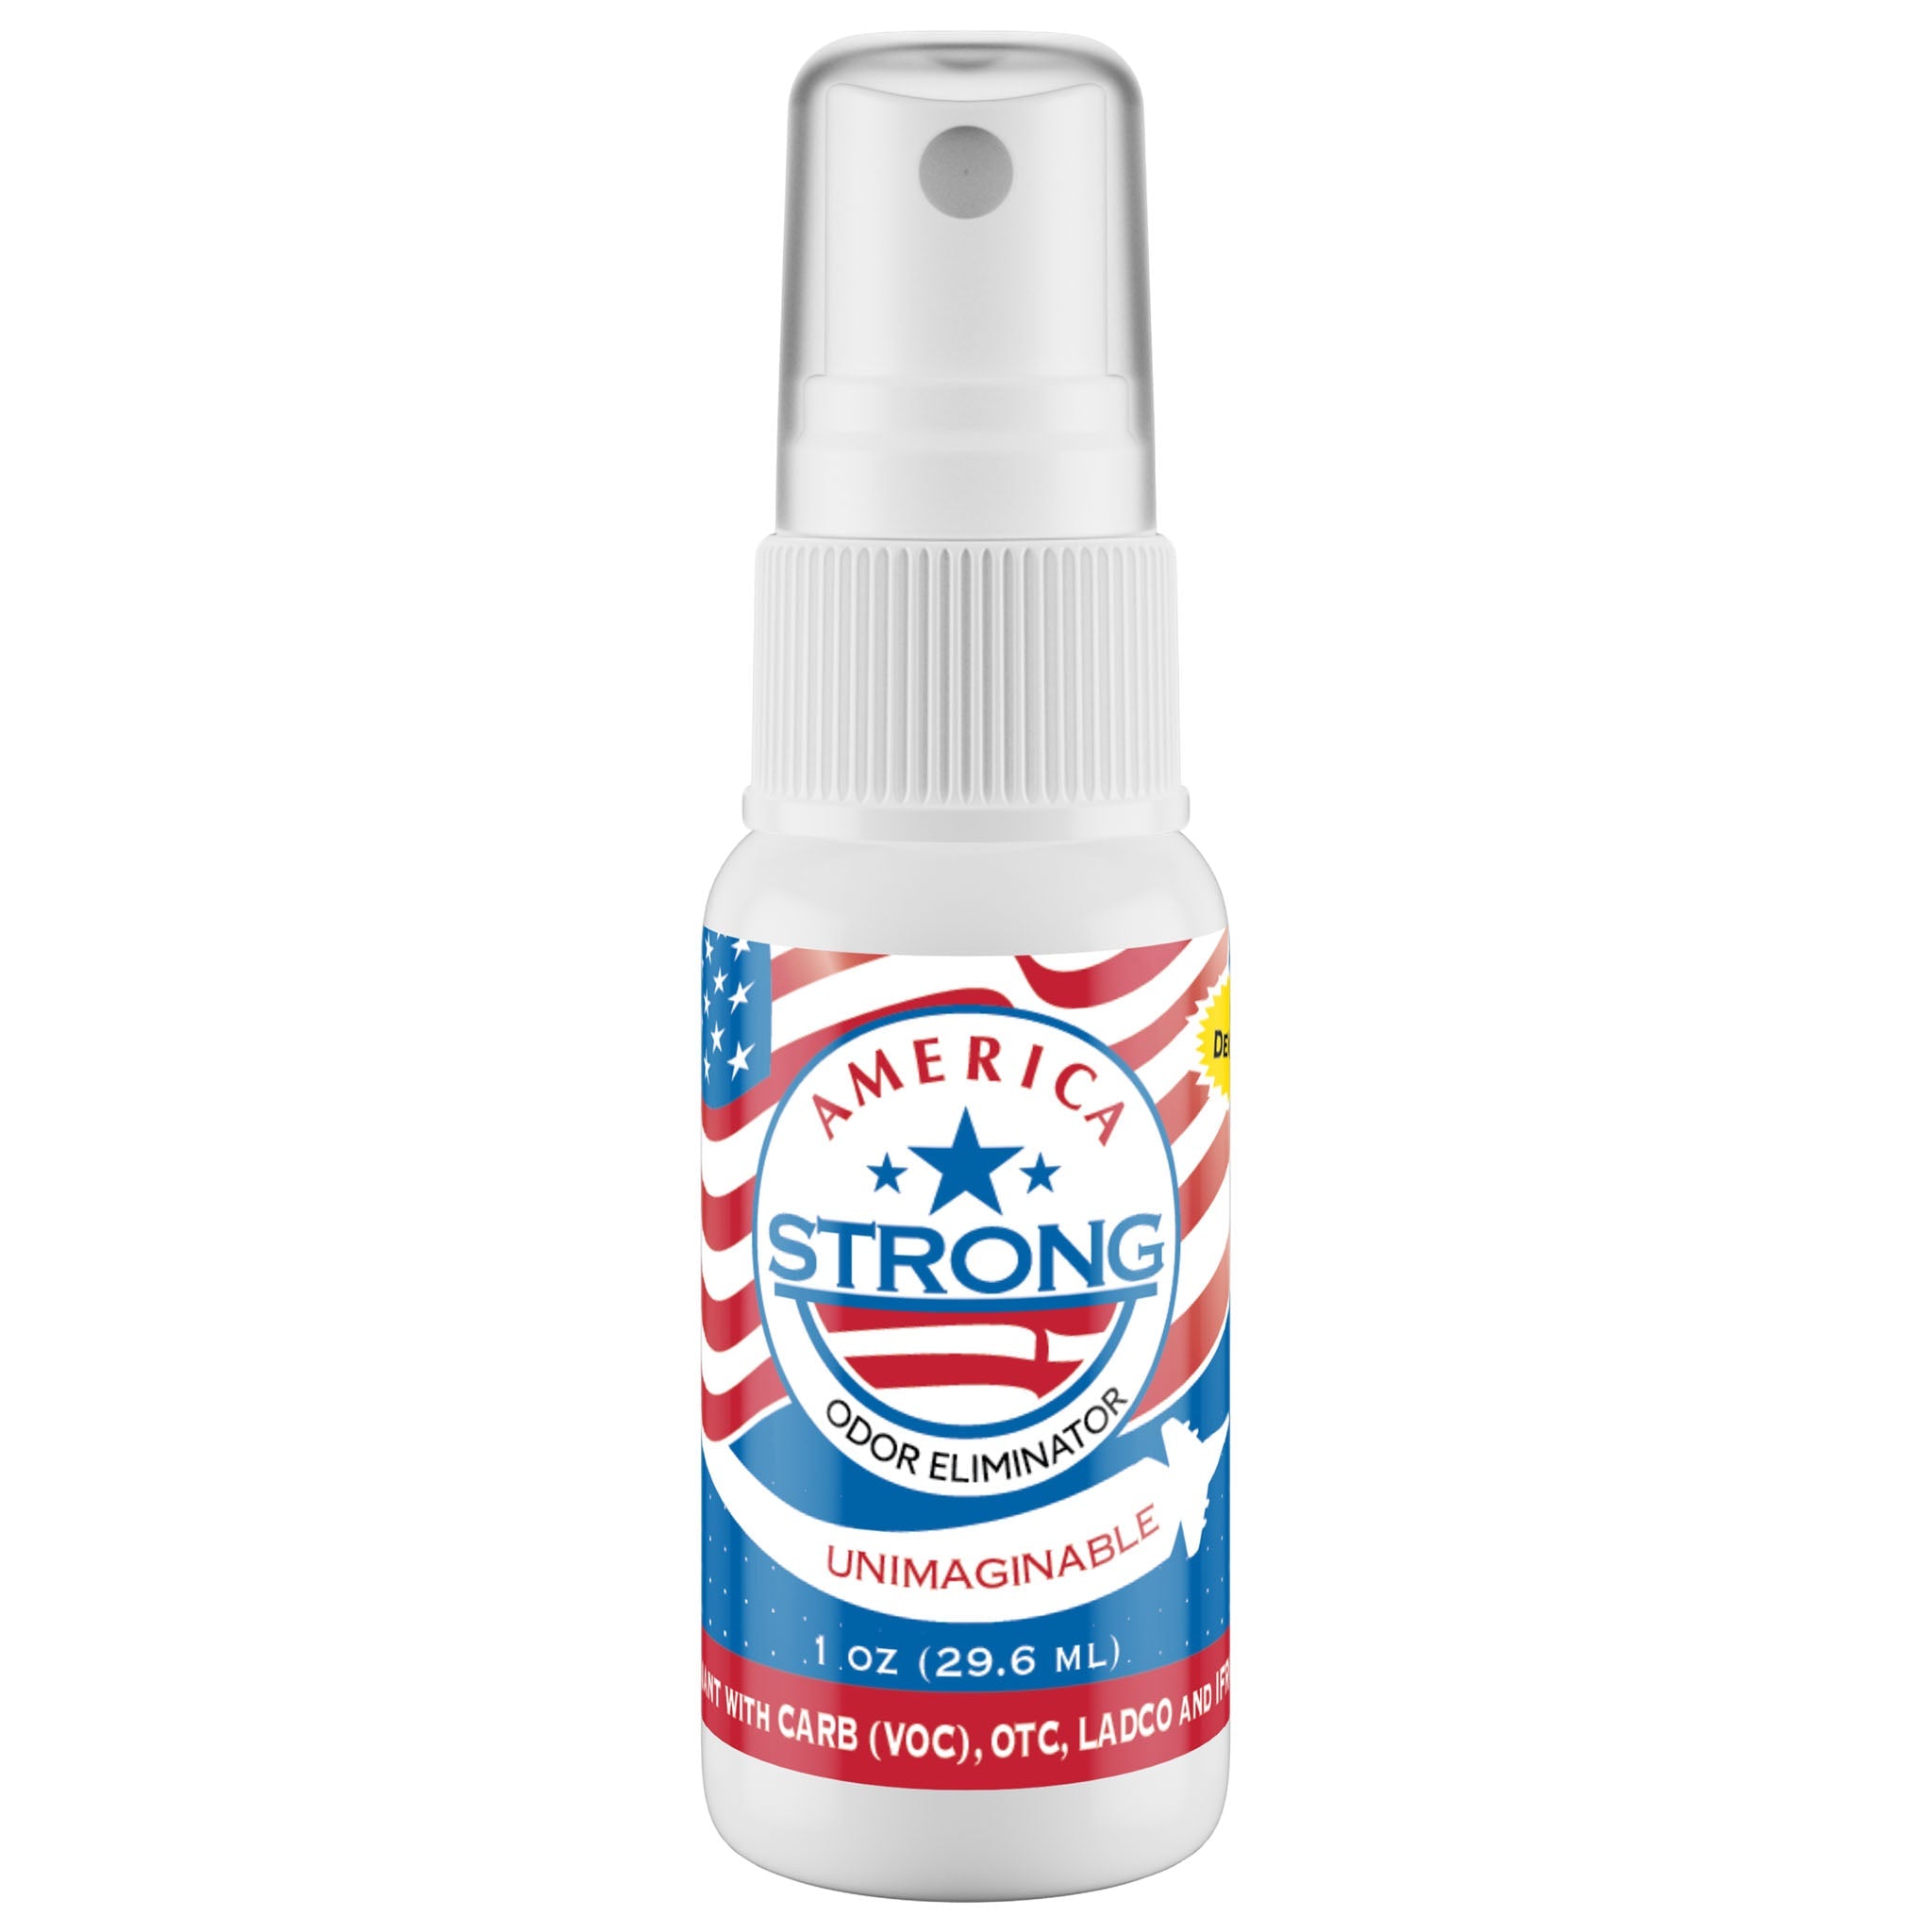 America Strong Odor Eliminator - Unimaginable Scent